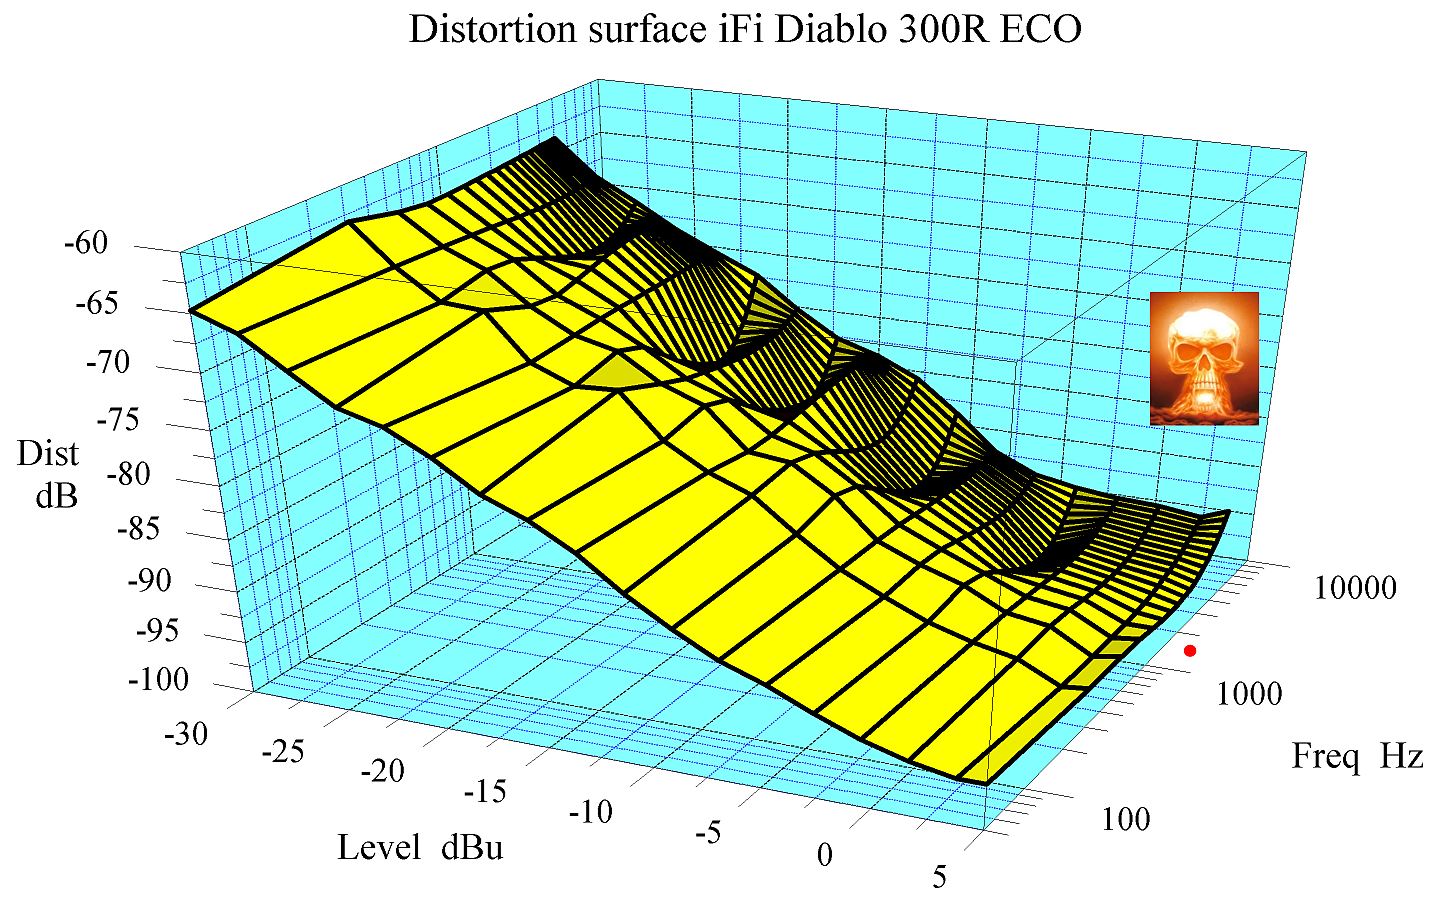 01 Distortion surface iFi Diablo 300R ECO 5 dBu max wm small.png